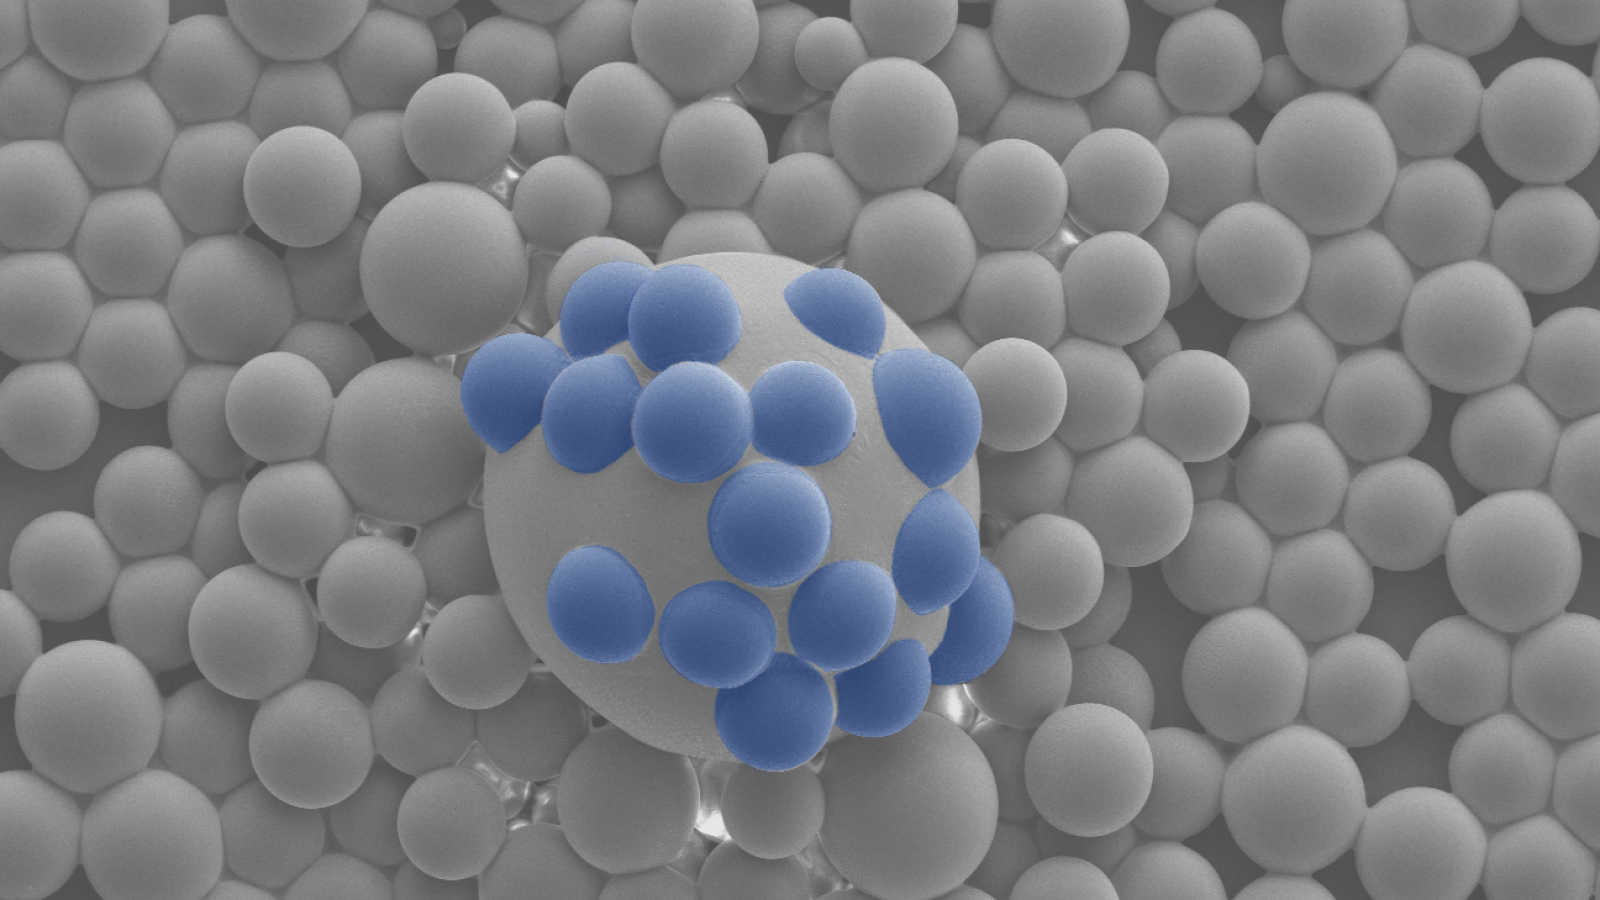 Nanoscale image of blue circular cells surrounding a larger circular particle